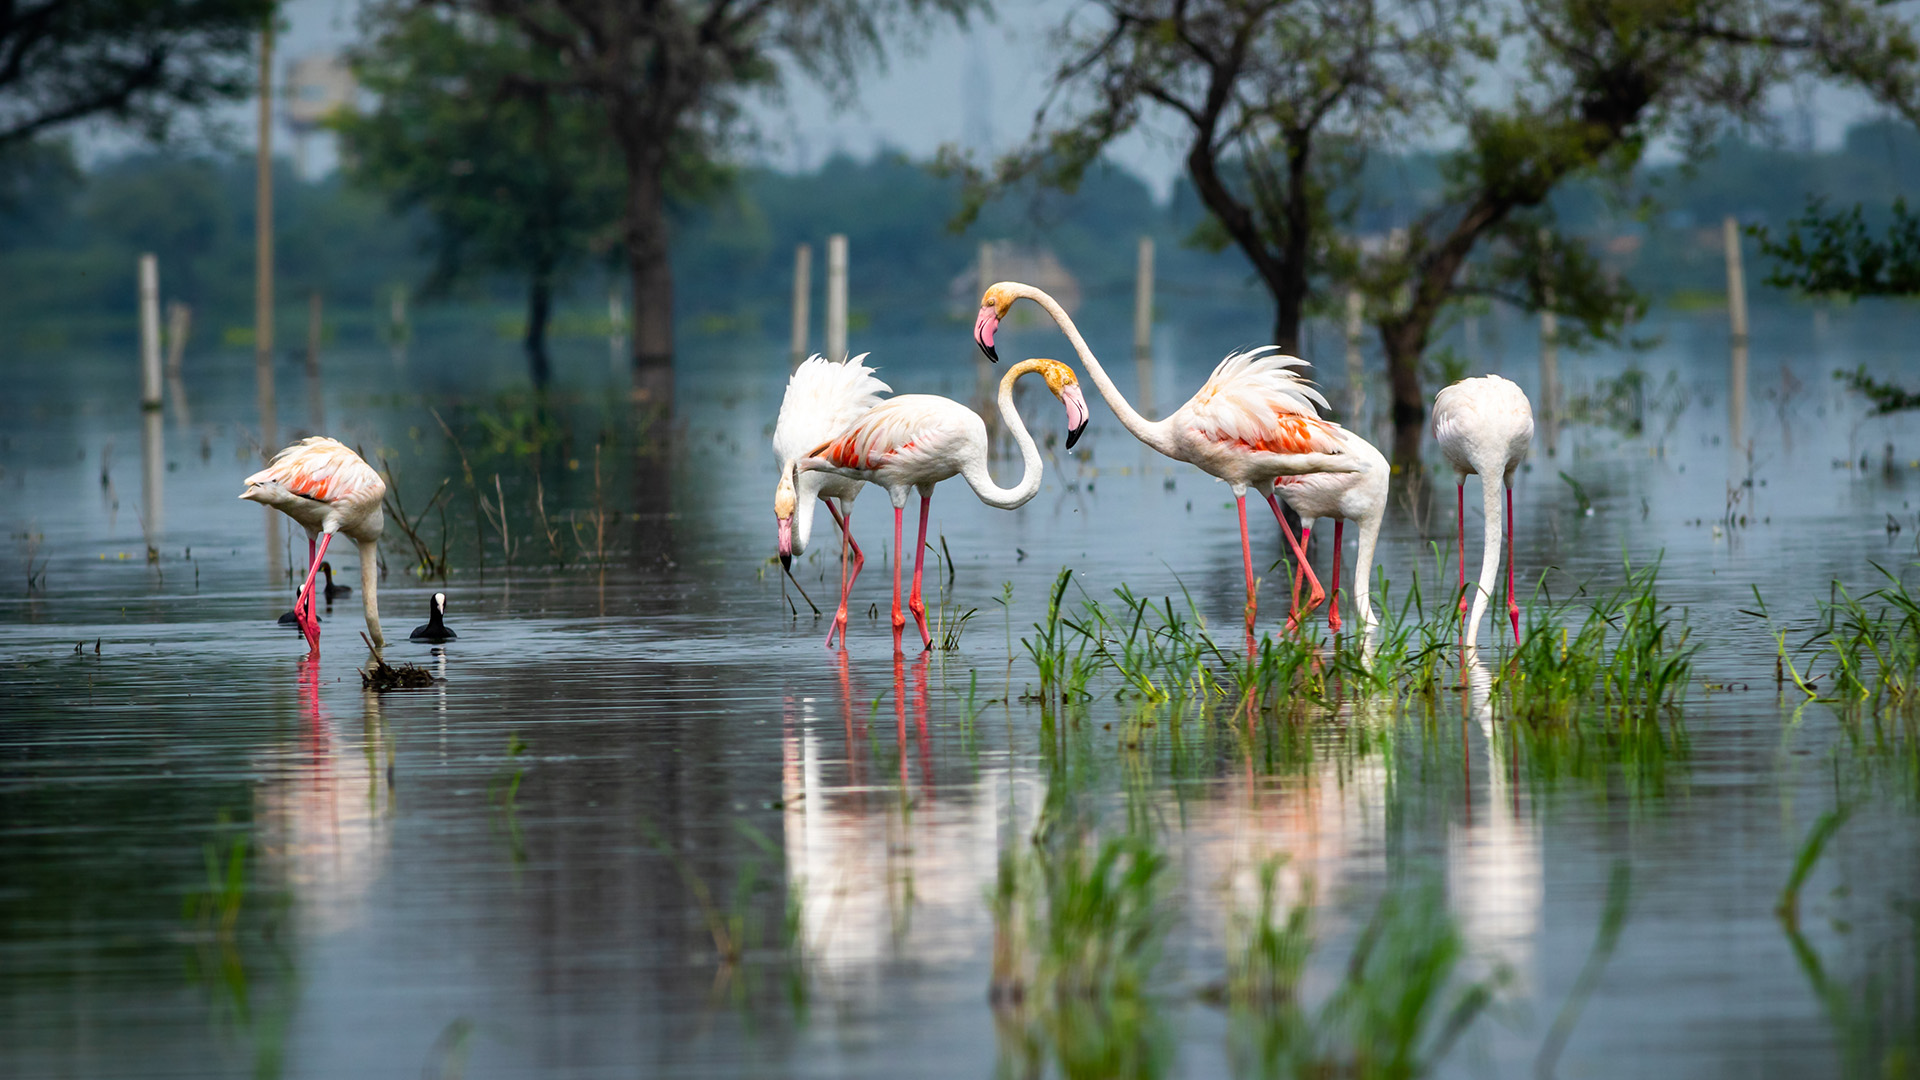 Greater flamingo at Keoladeo National Park or Bharatpur Bird Sanctuary,  Rajasthan, India | Windows 10 Spotlight Images